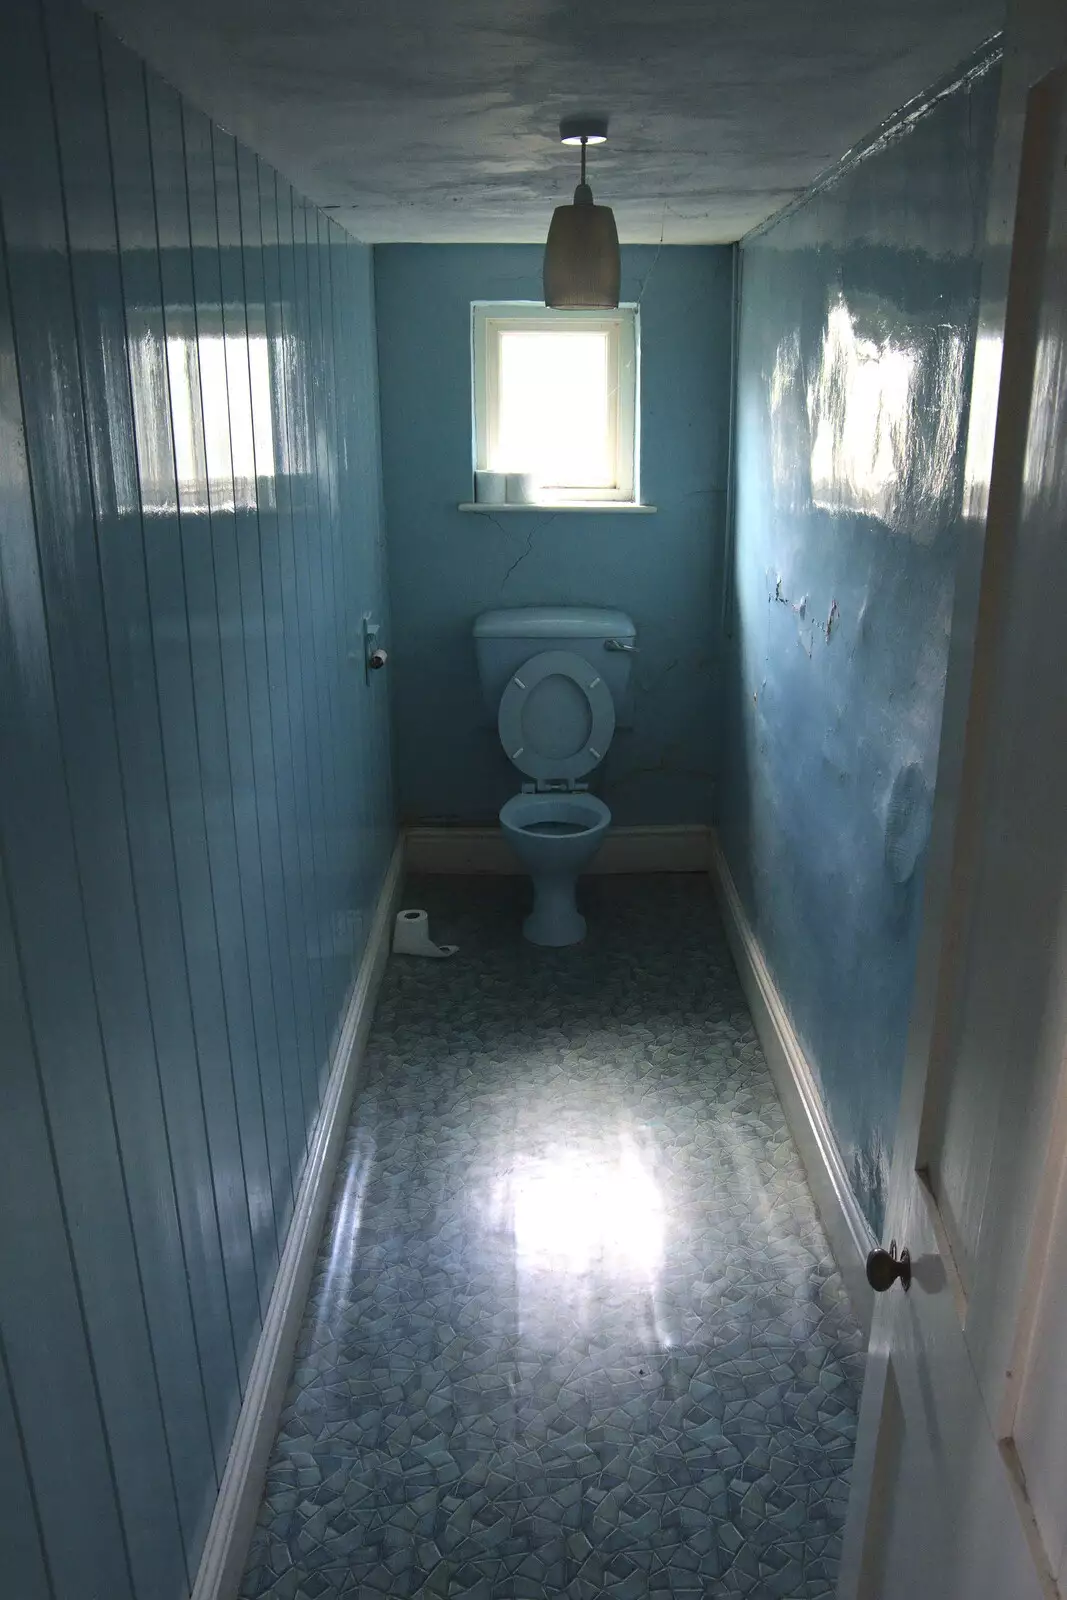 A disturbingly-long toilet, from A 1940s Timewarp, Site 4, Bungay Airfield, Flixton, Suffolk - 9th June 2022